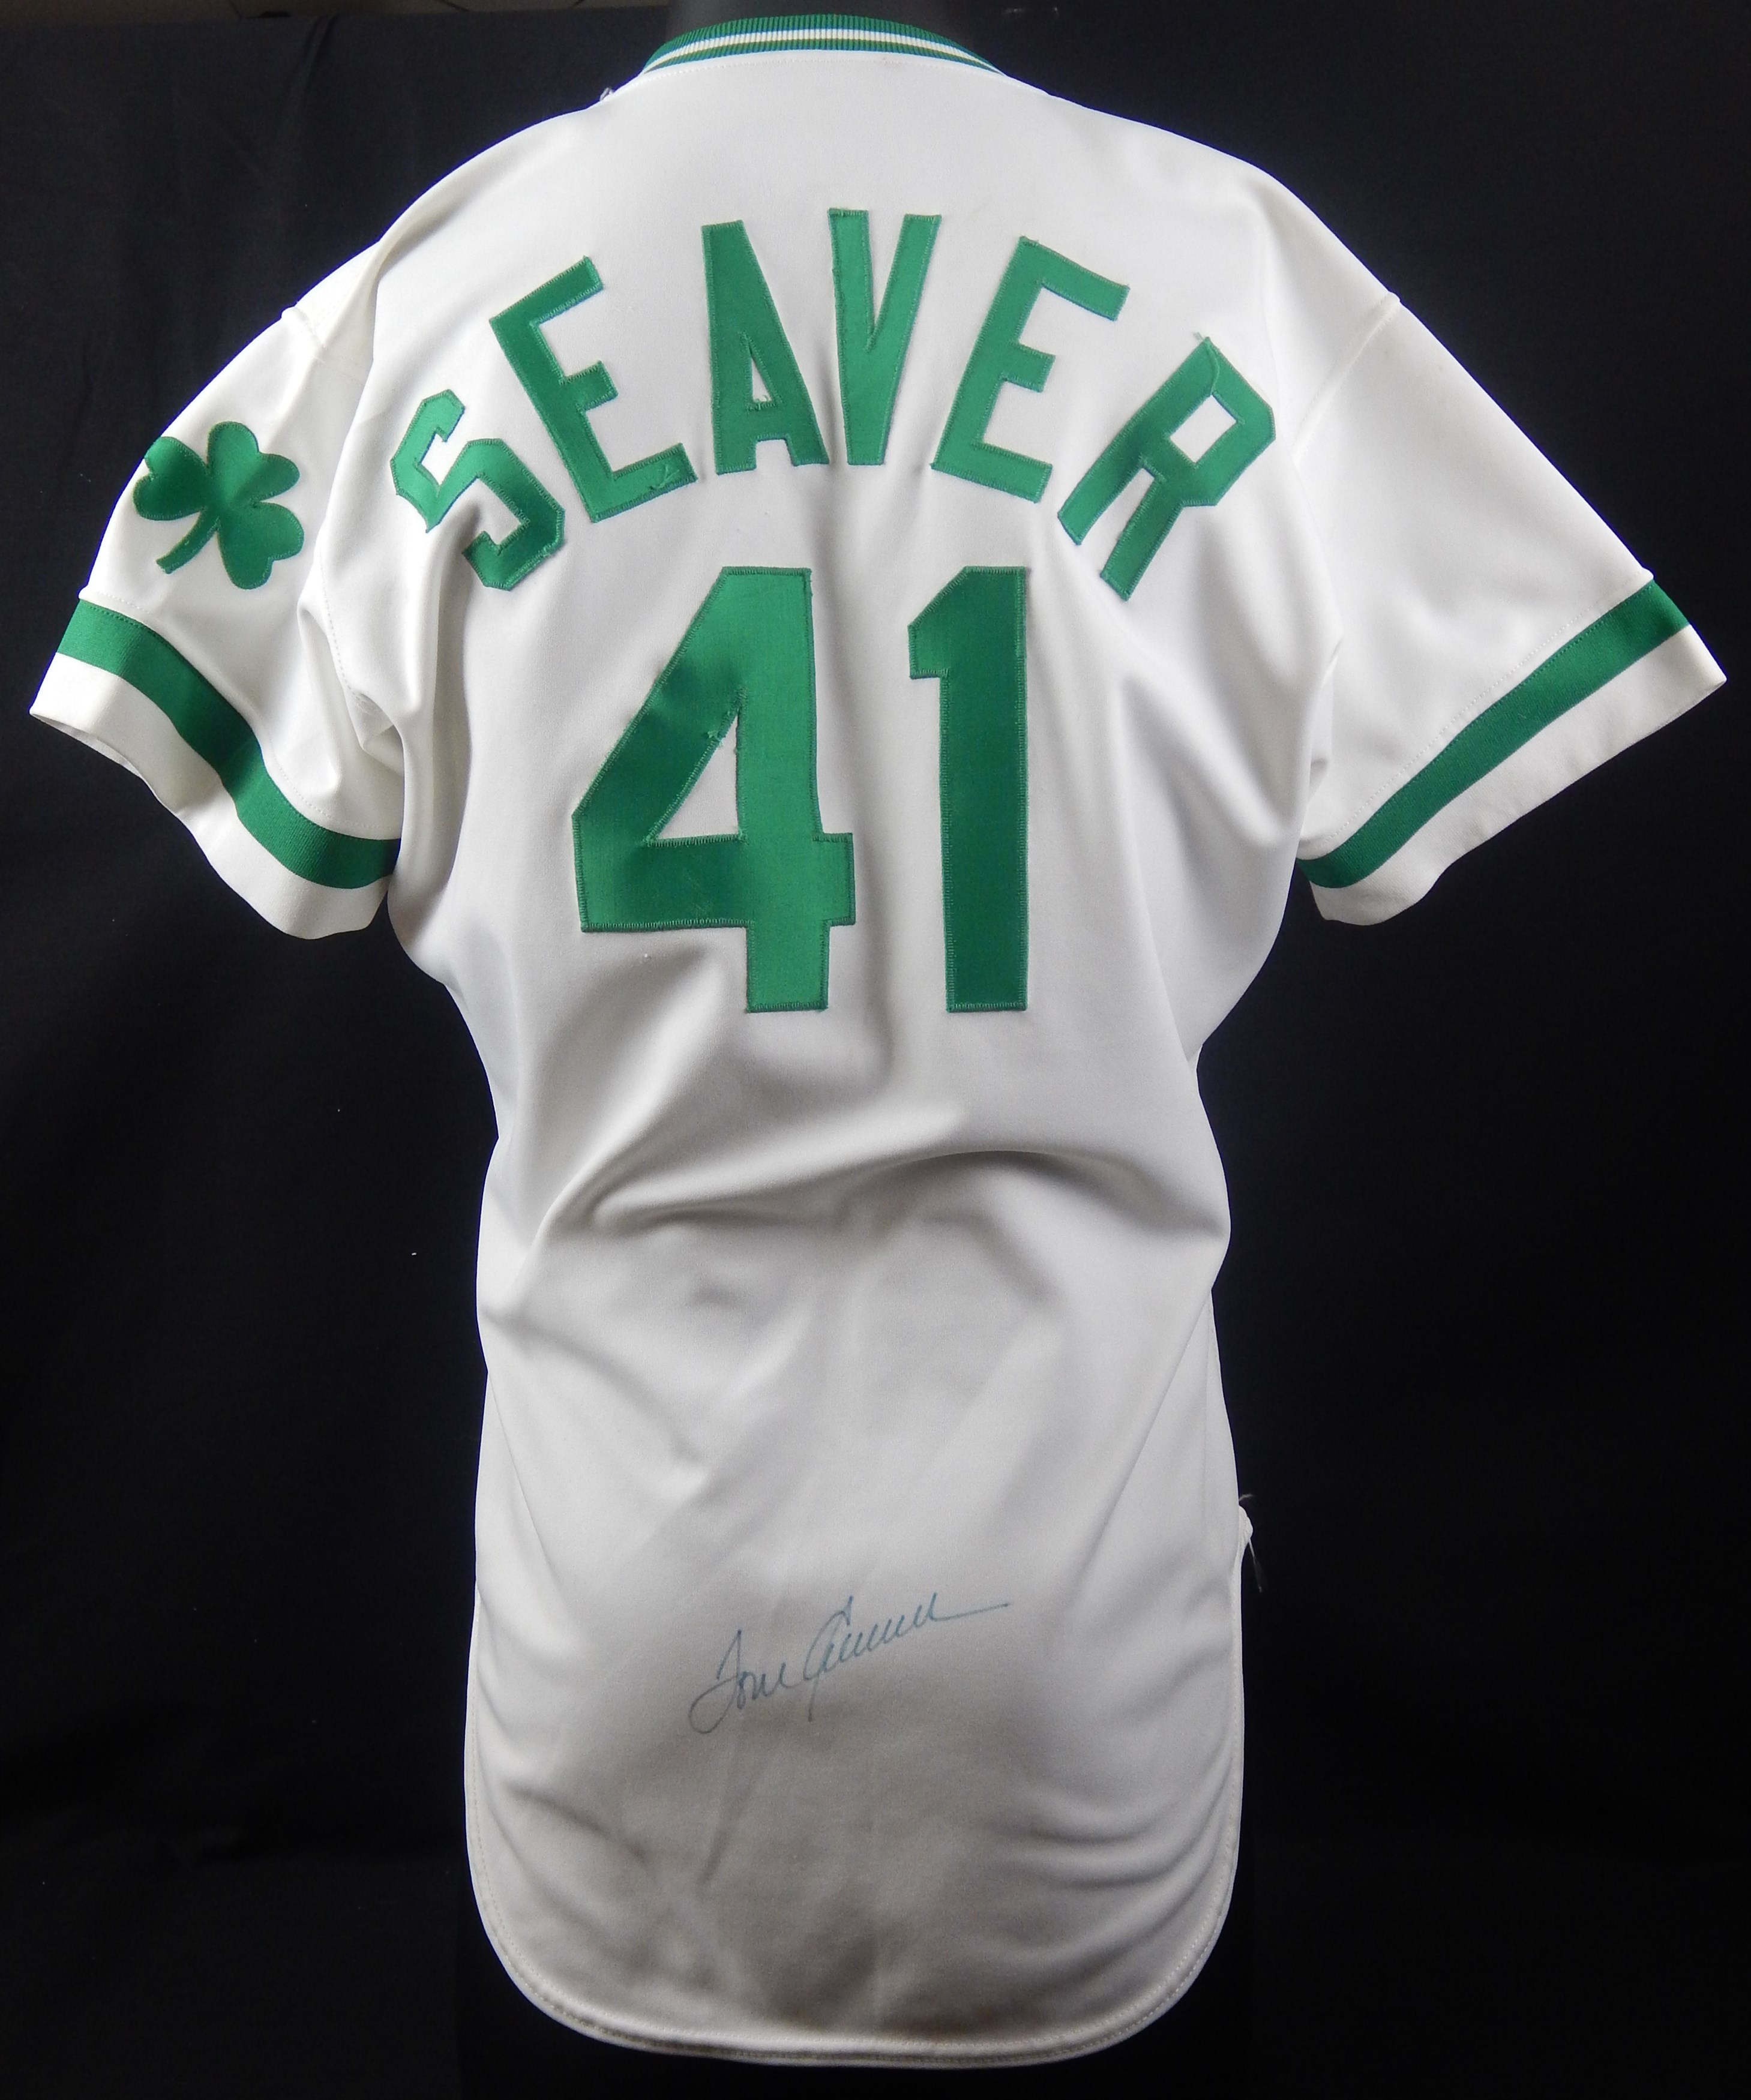 1980 Tom Seaver St. Patrick's Day Signed Replica Jersey